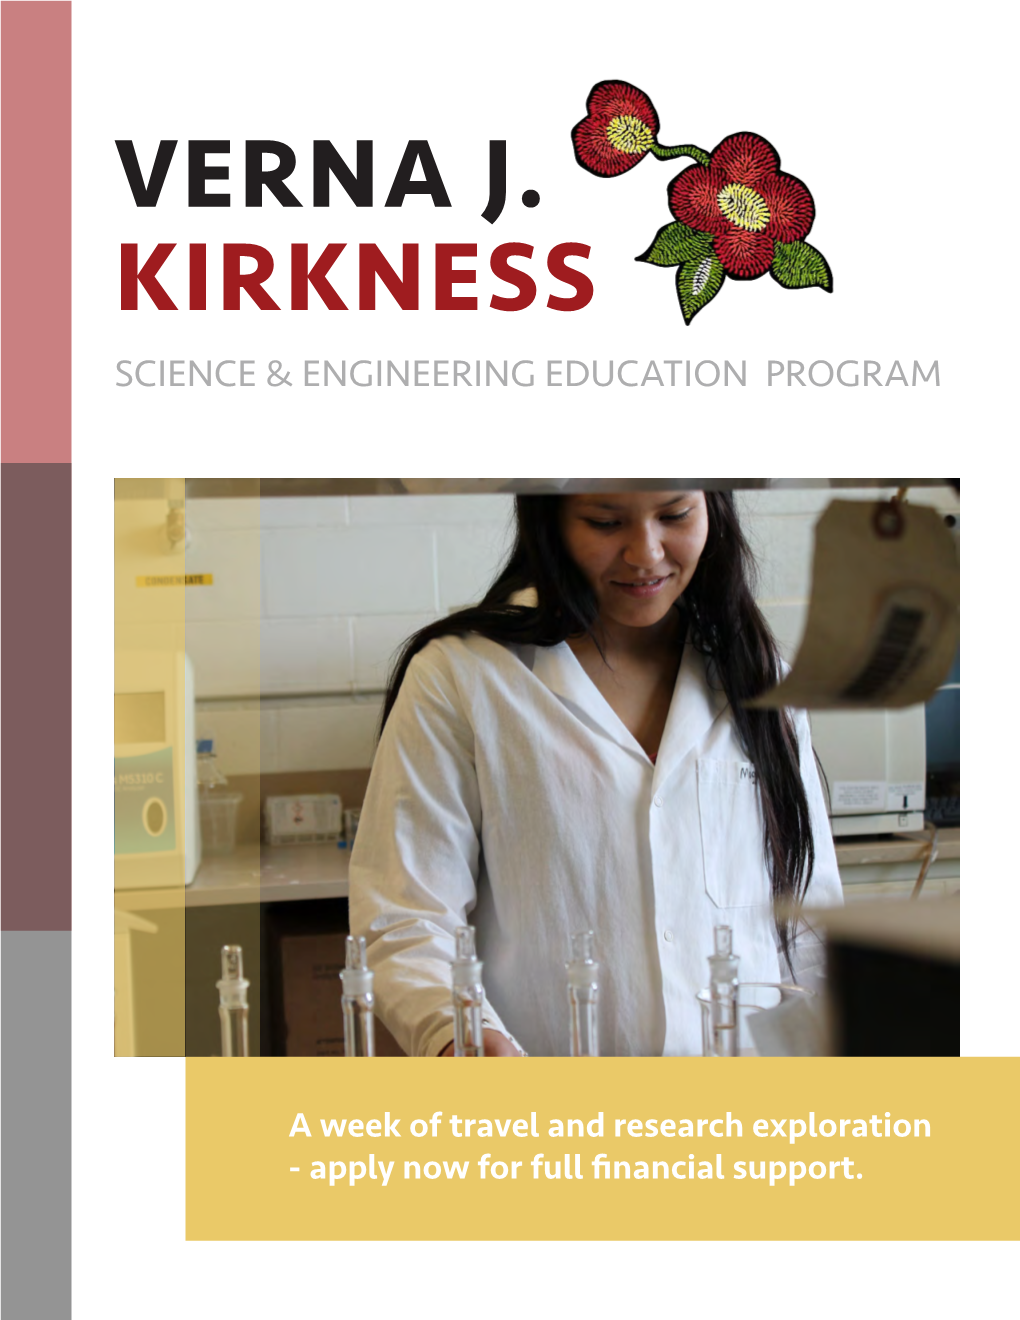 Verna J. Kirkness Science and Engineering Education Program